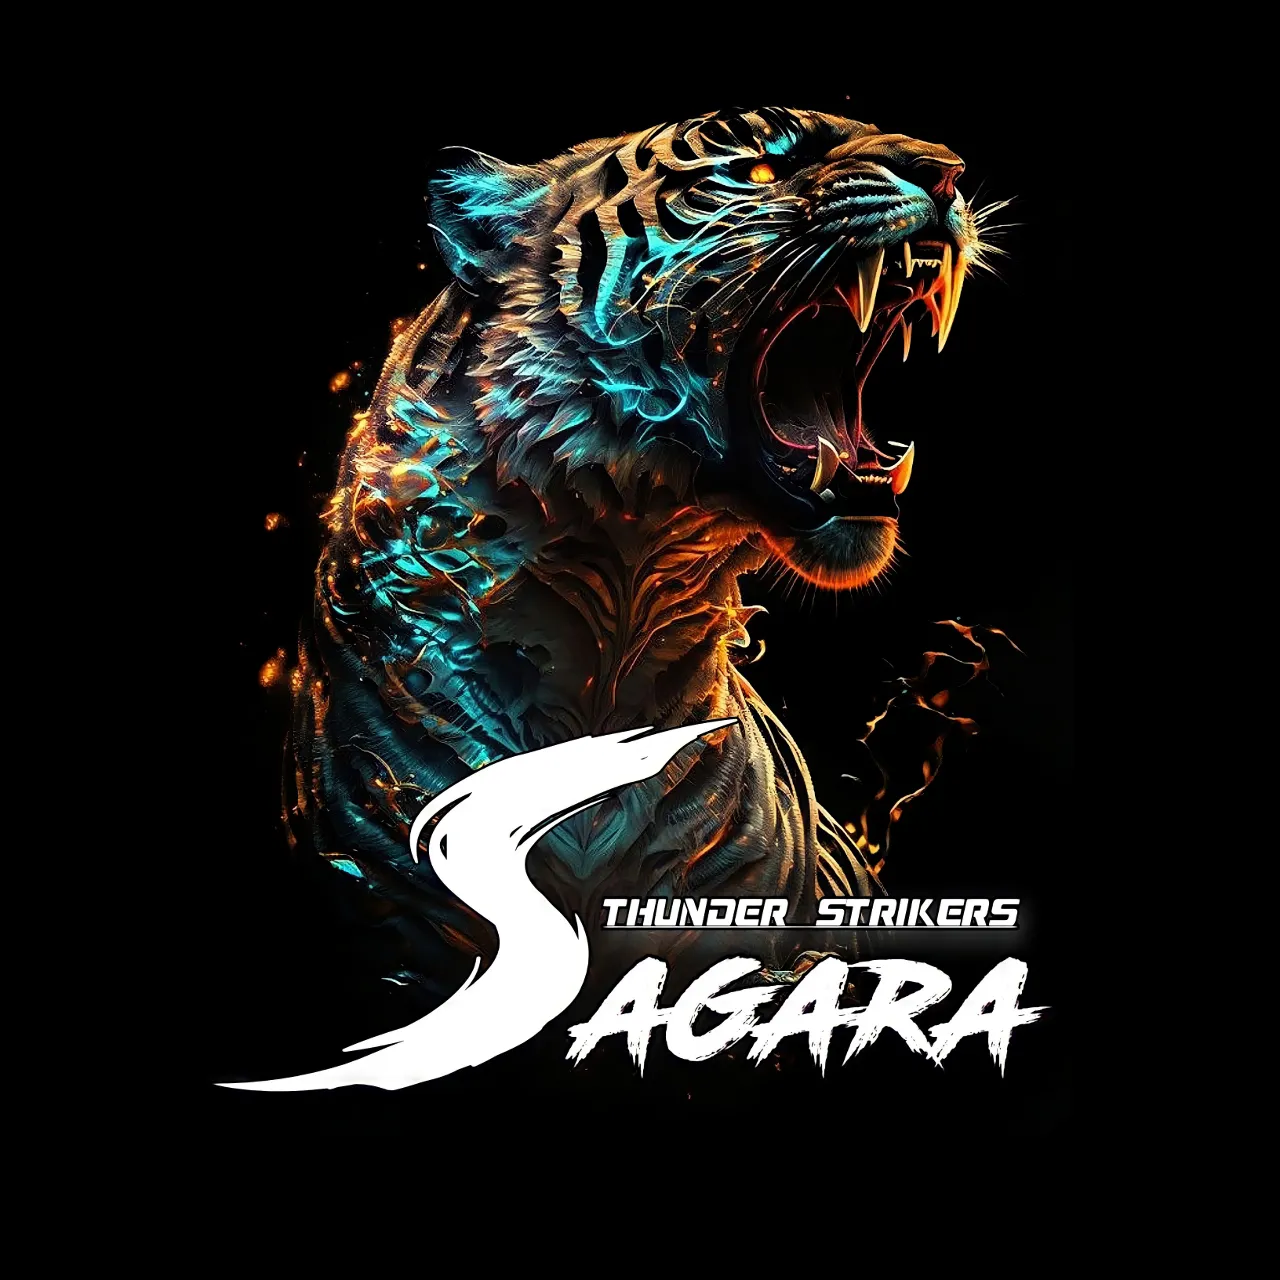 the logo for thunder strikers sagara